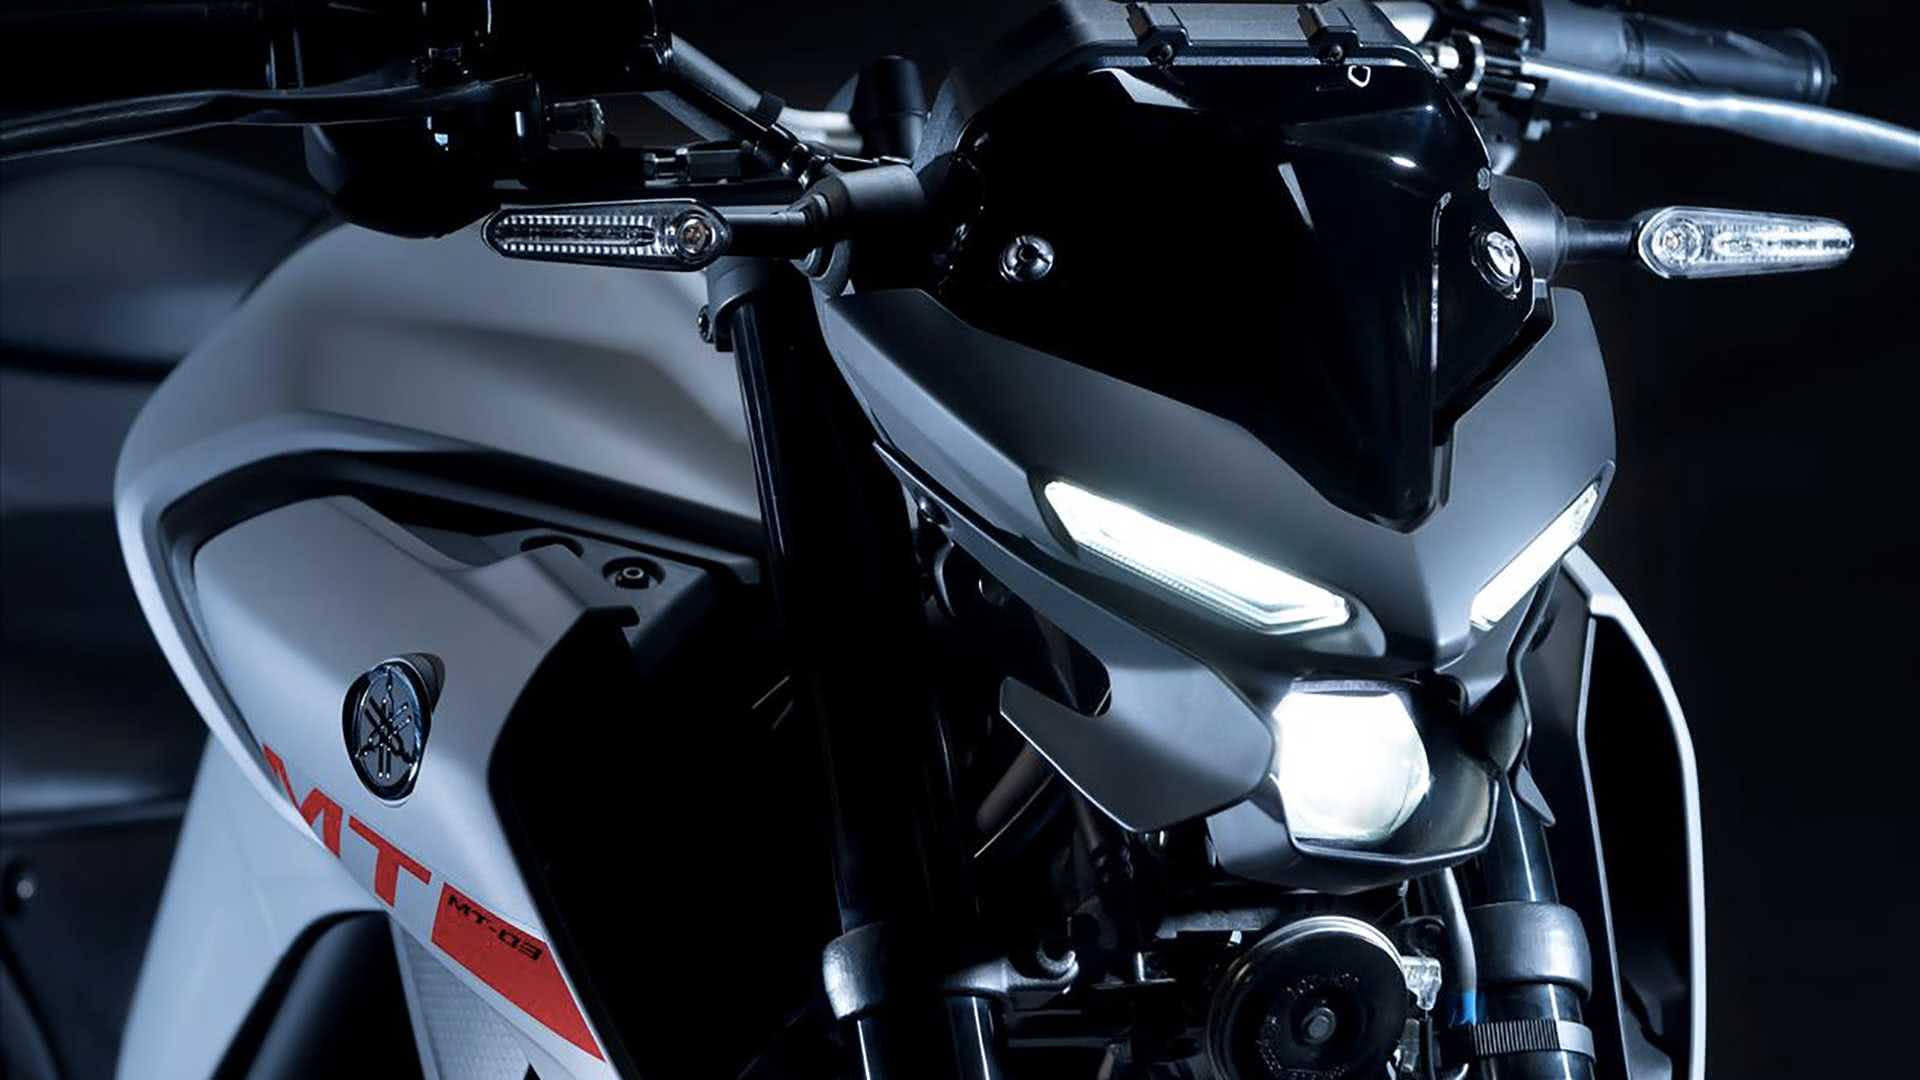 Yamaha MT-03 2021